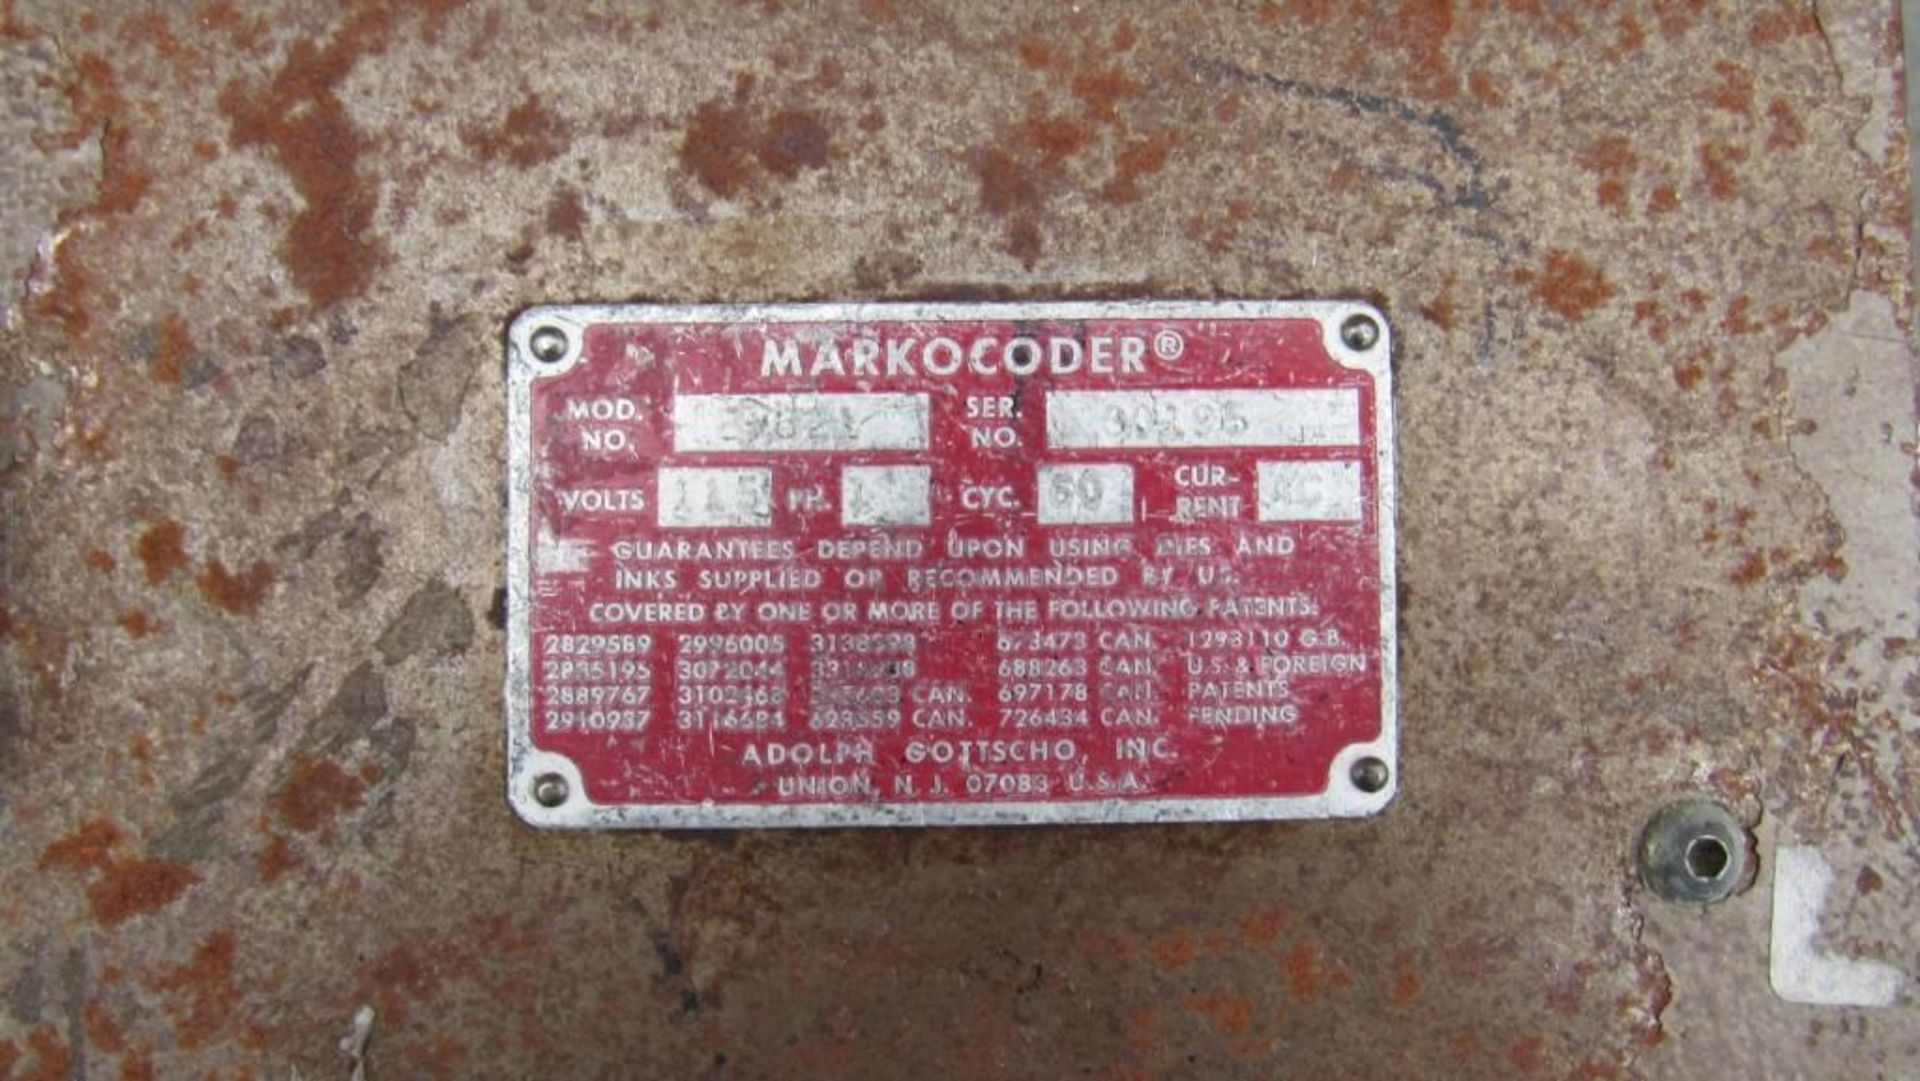 1-Used Mark coder - Image 13 of 19